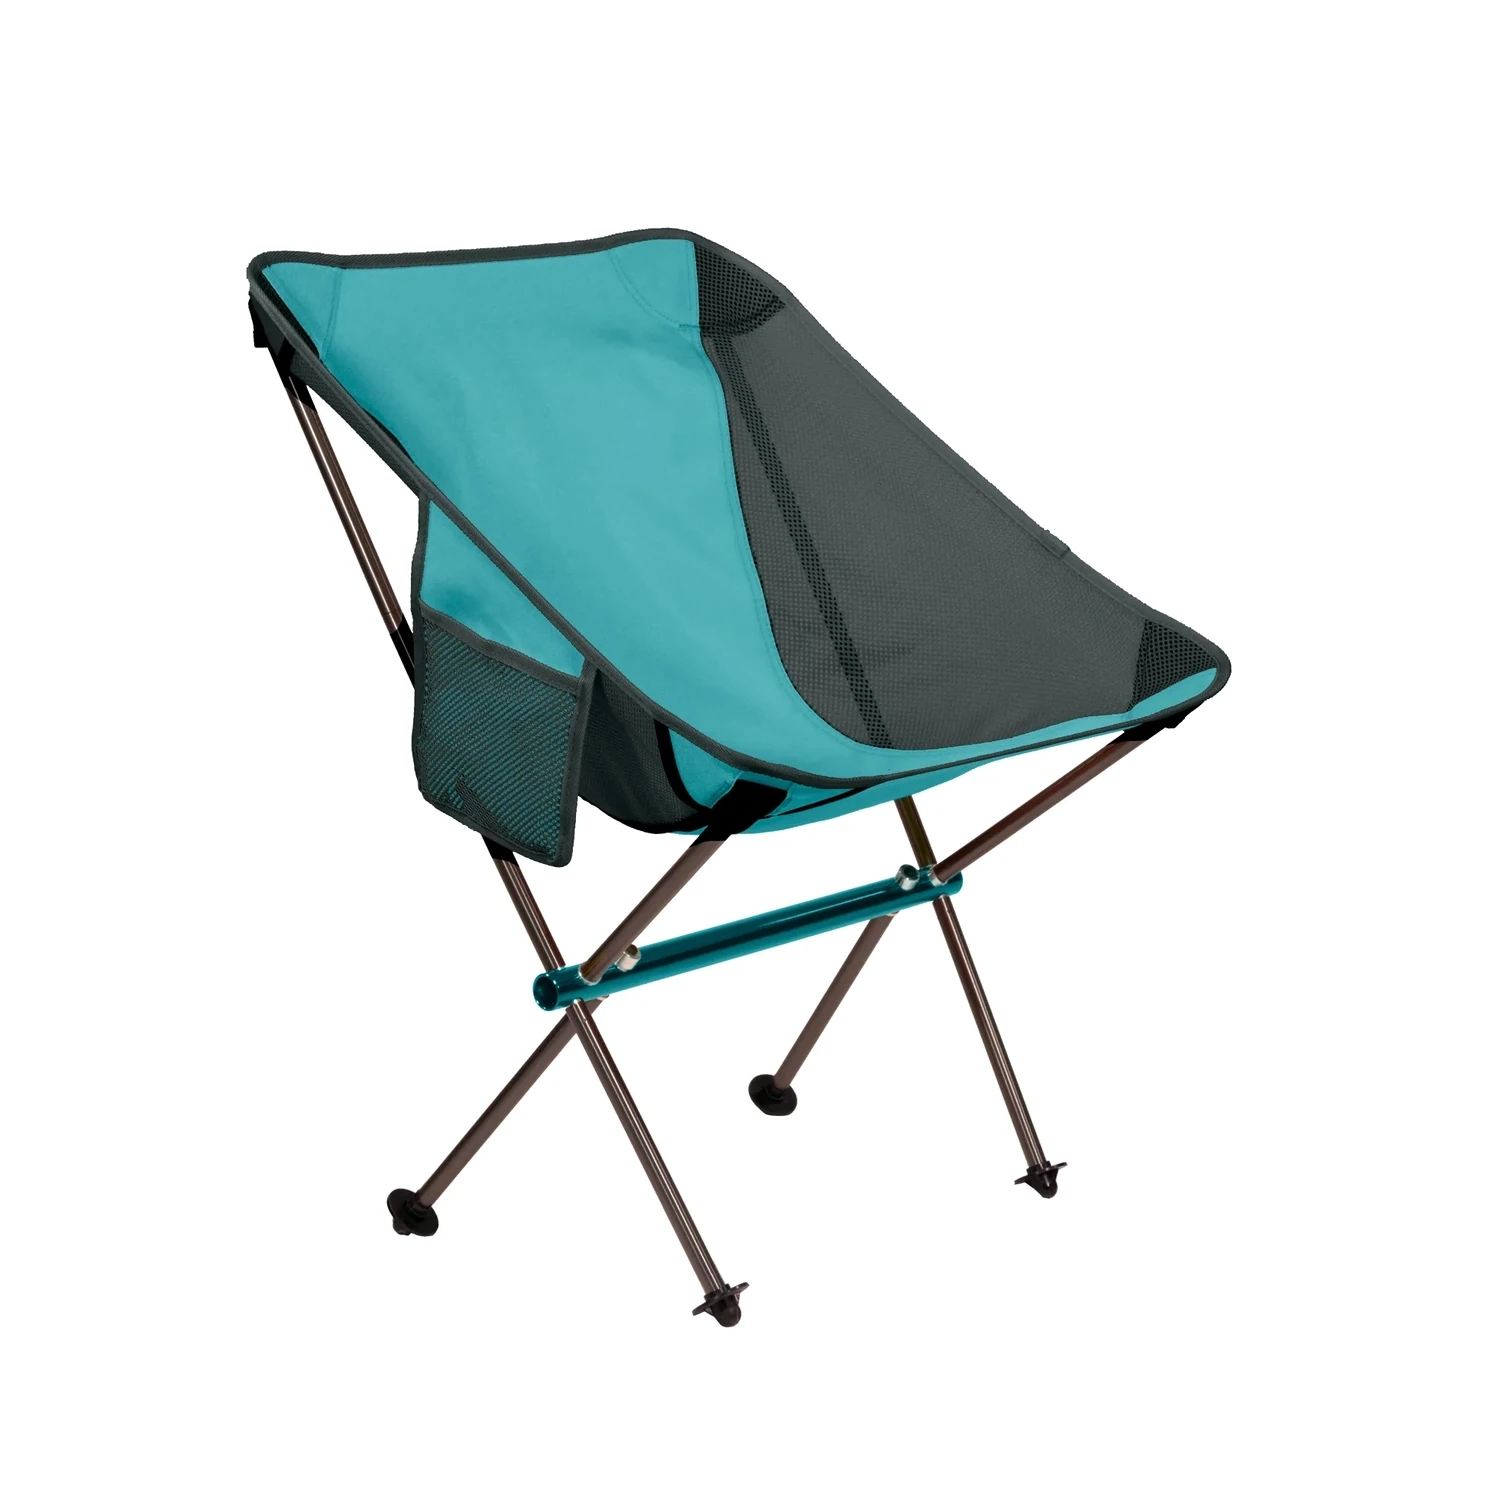 Backpacking Chair - Klymit Ridgeline Short or similar